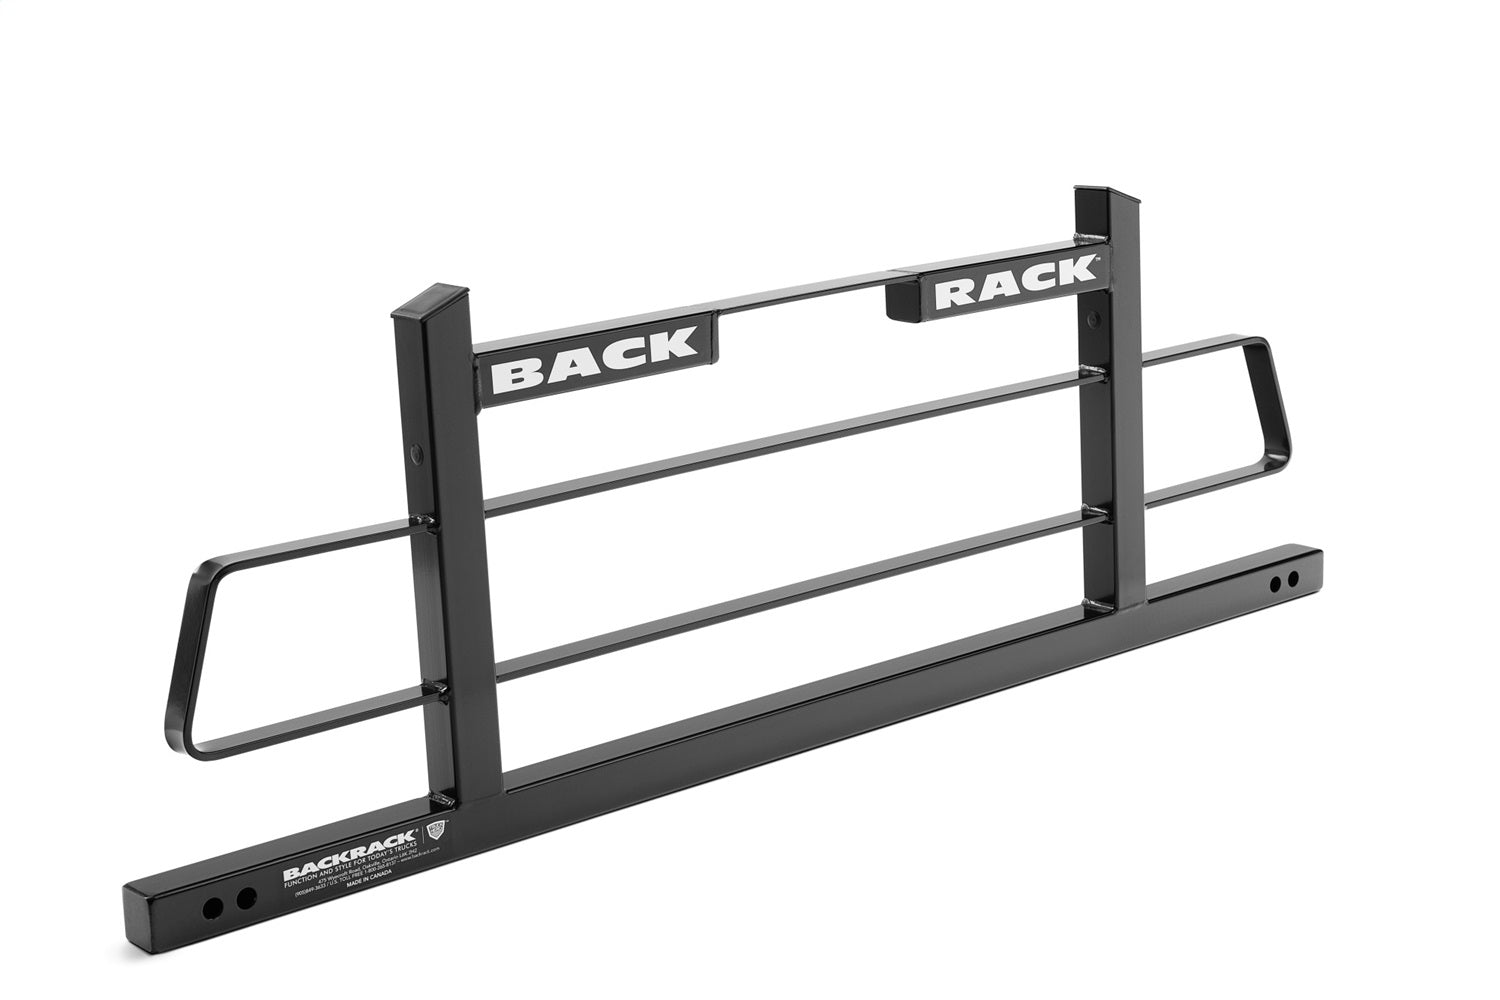 Backrack 15010 Backrack Headache Rack Frame